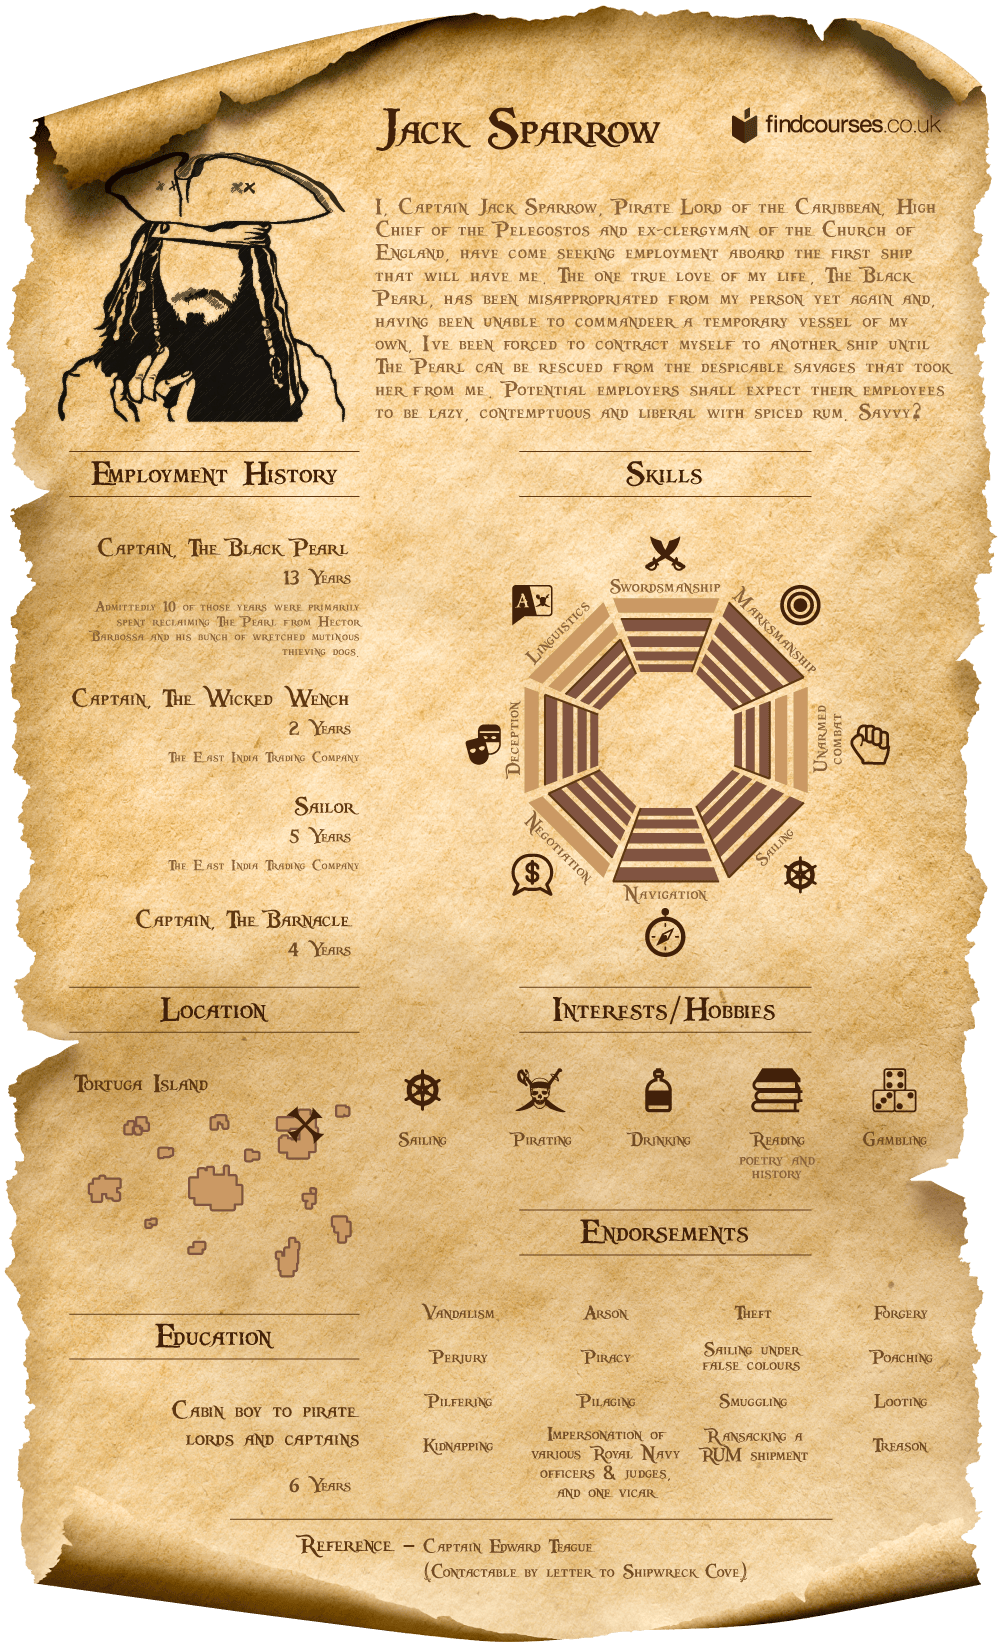 Jack Sparrow's resume